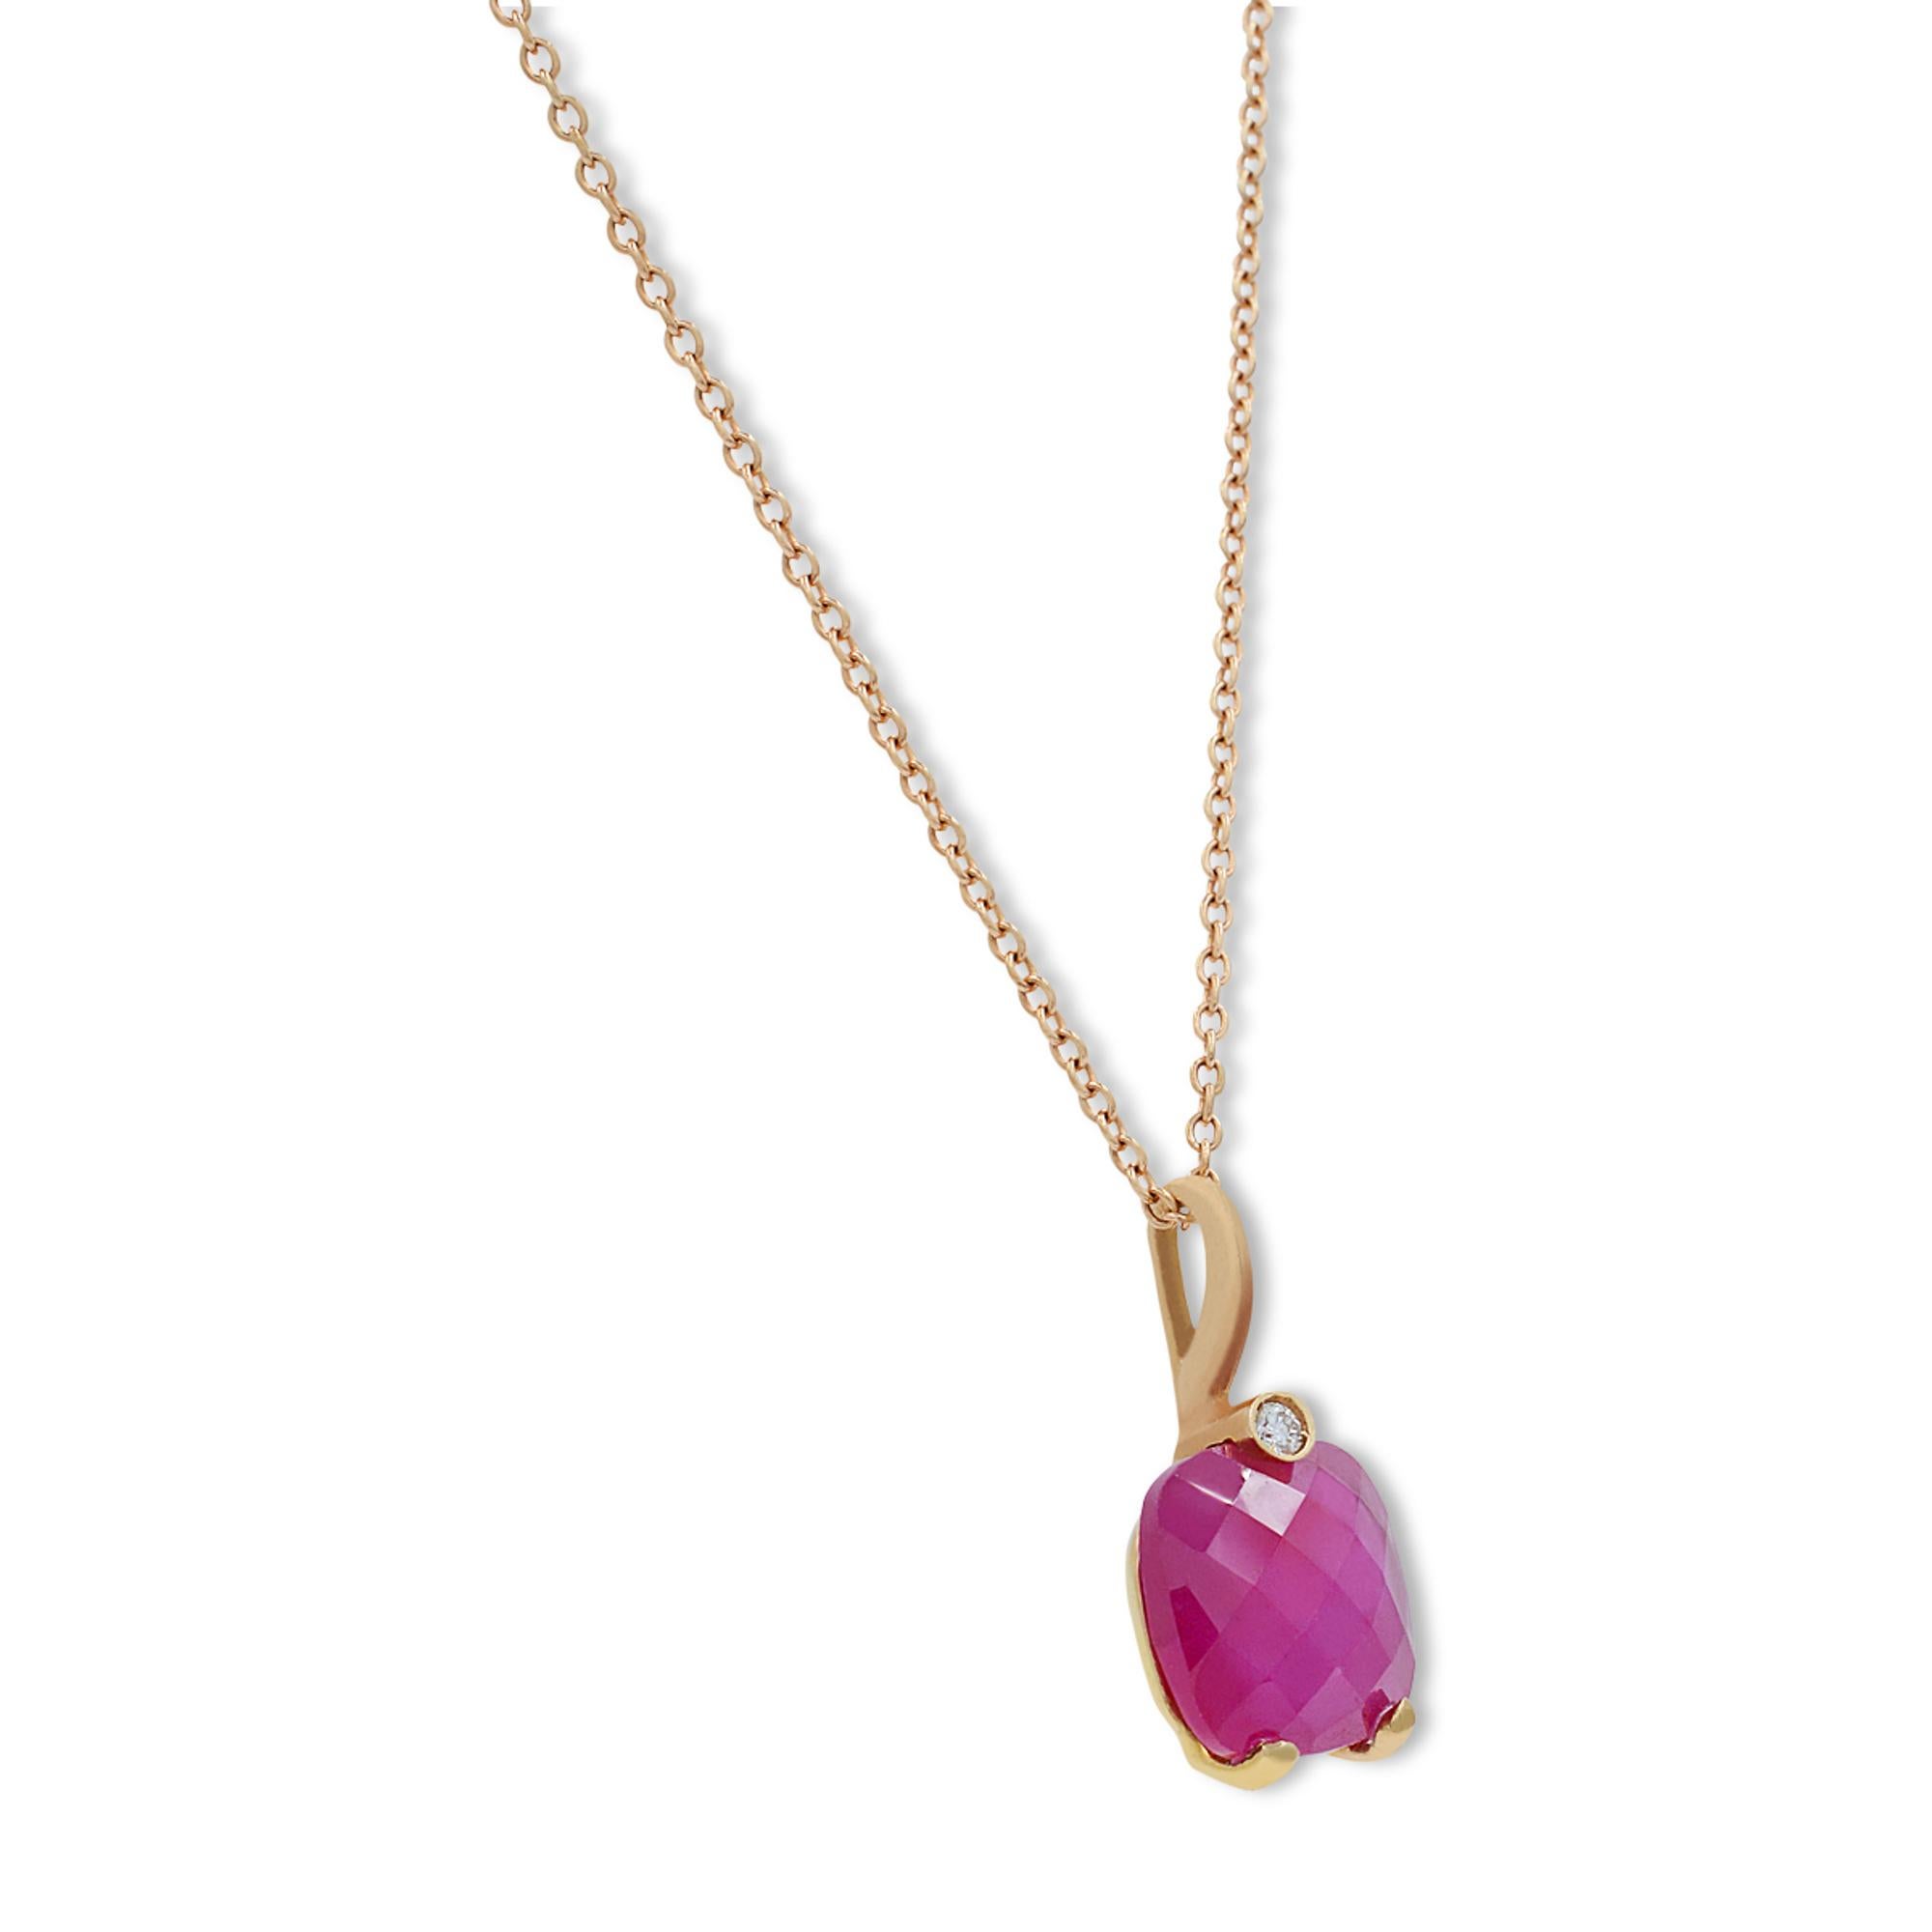 Cushion Cut Rachel Koen Diamond Pink Rhodolite Pendant Necklace 18K Yellow Gold For Sale